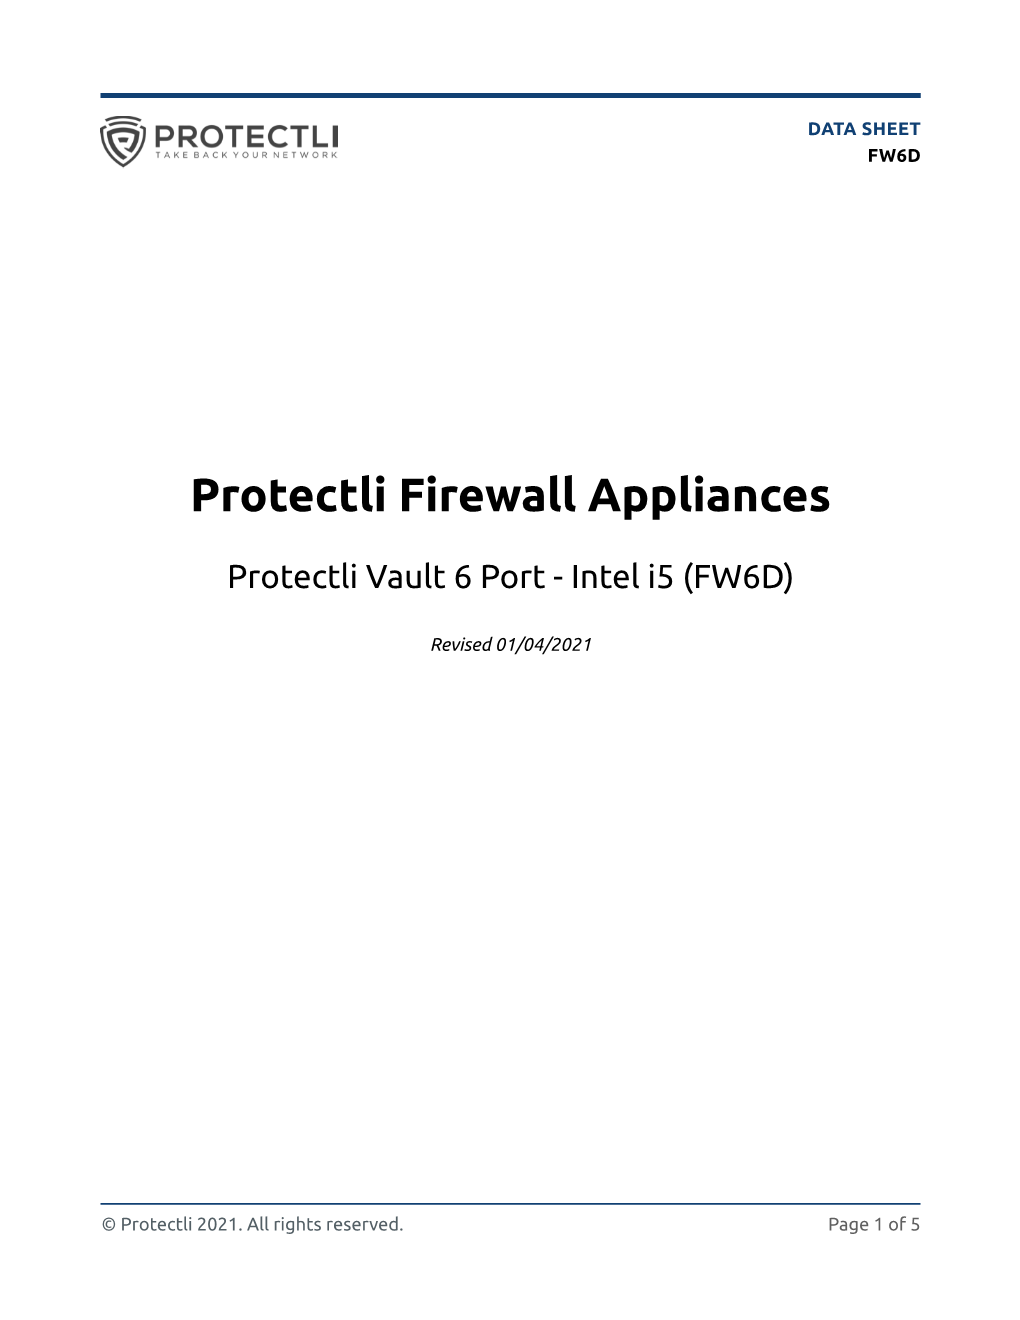 Protectli Firewall Appliances